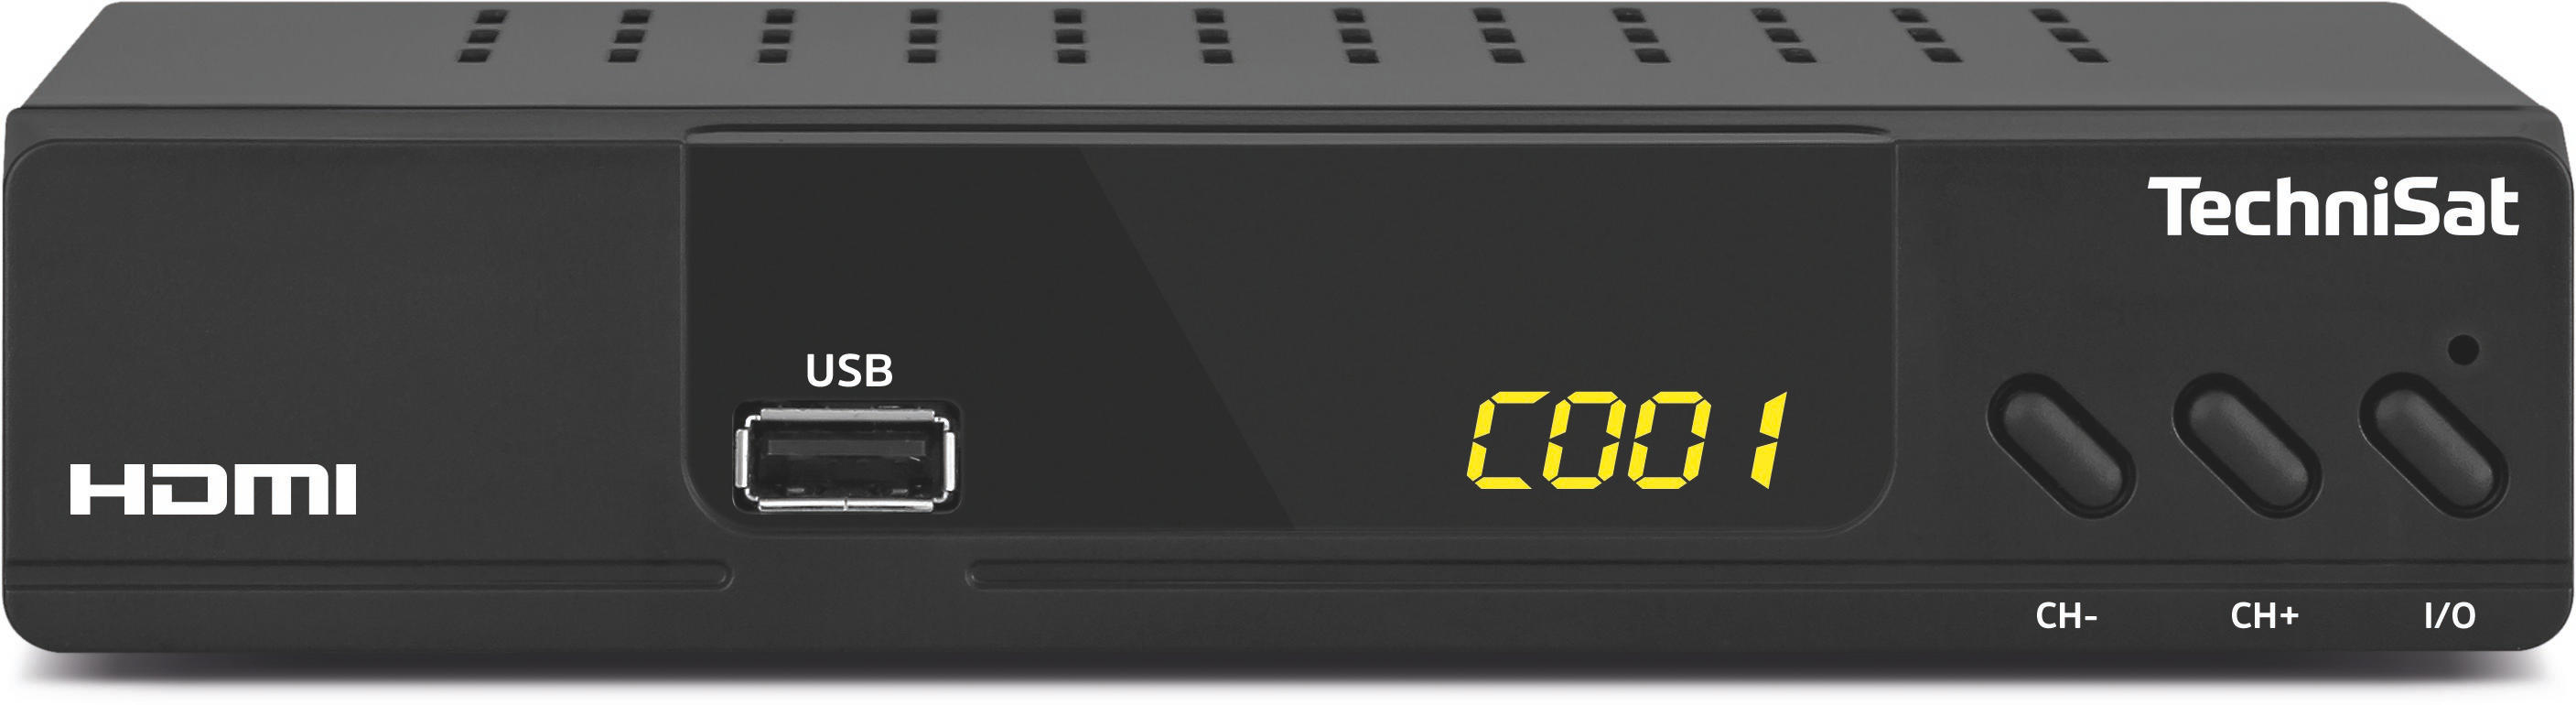 232 TECHNISAT HD-C DVB-C2, Schwarz) Receiver HDTV (DVB-C,